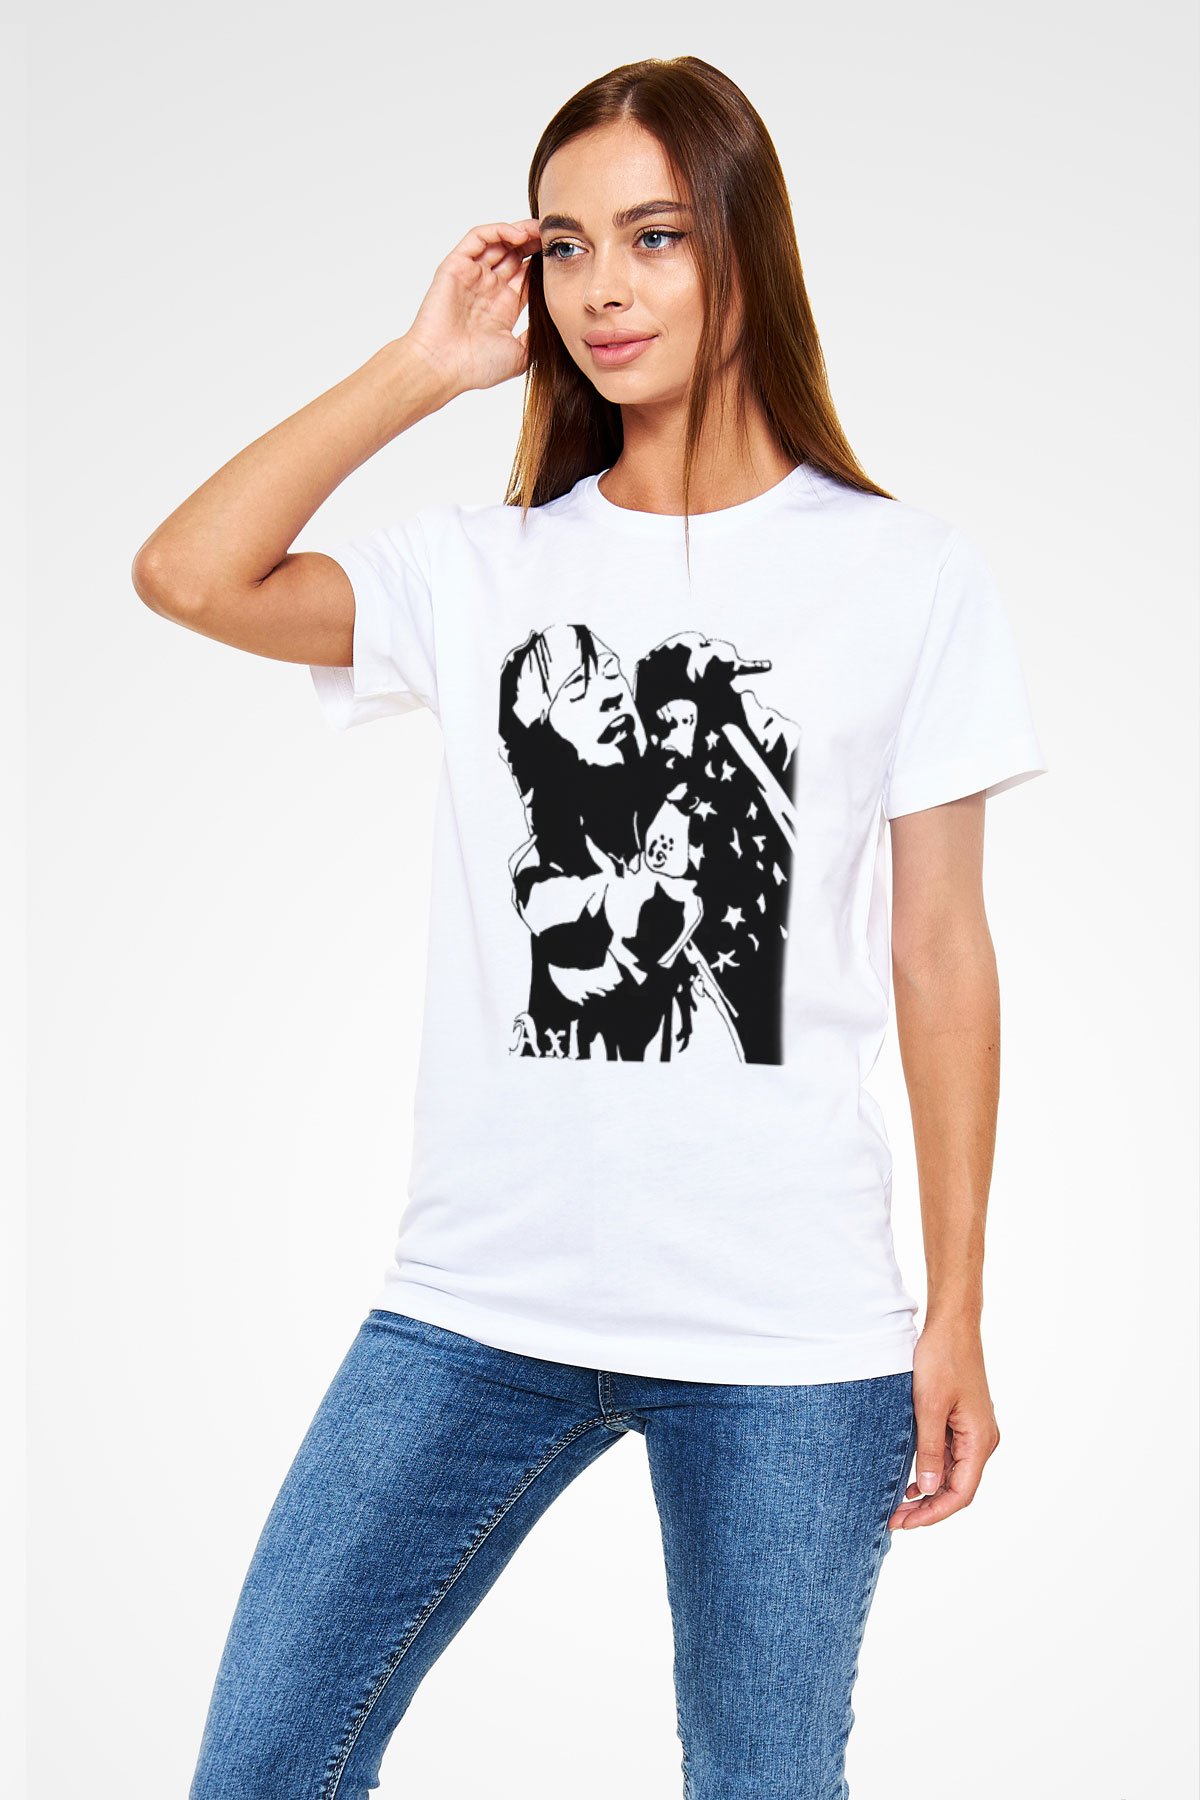 Axl Rose White Unisex T-Shirt - Tees - Shirts